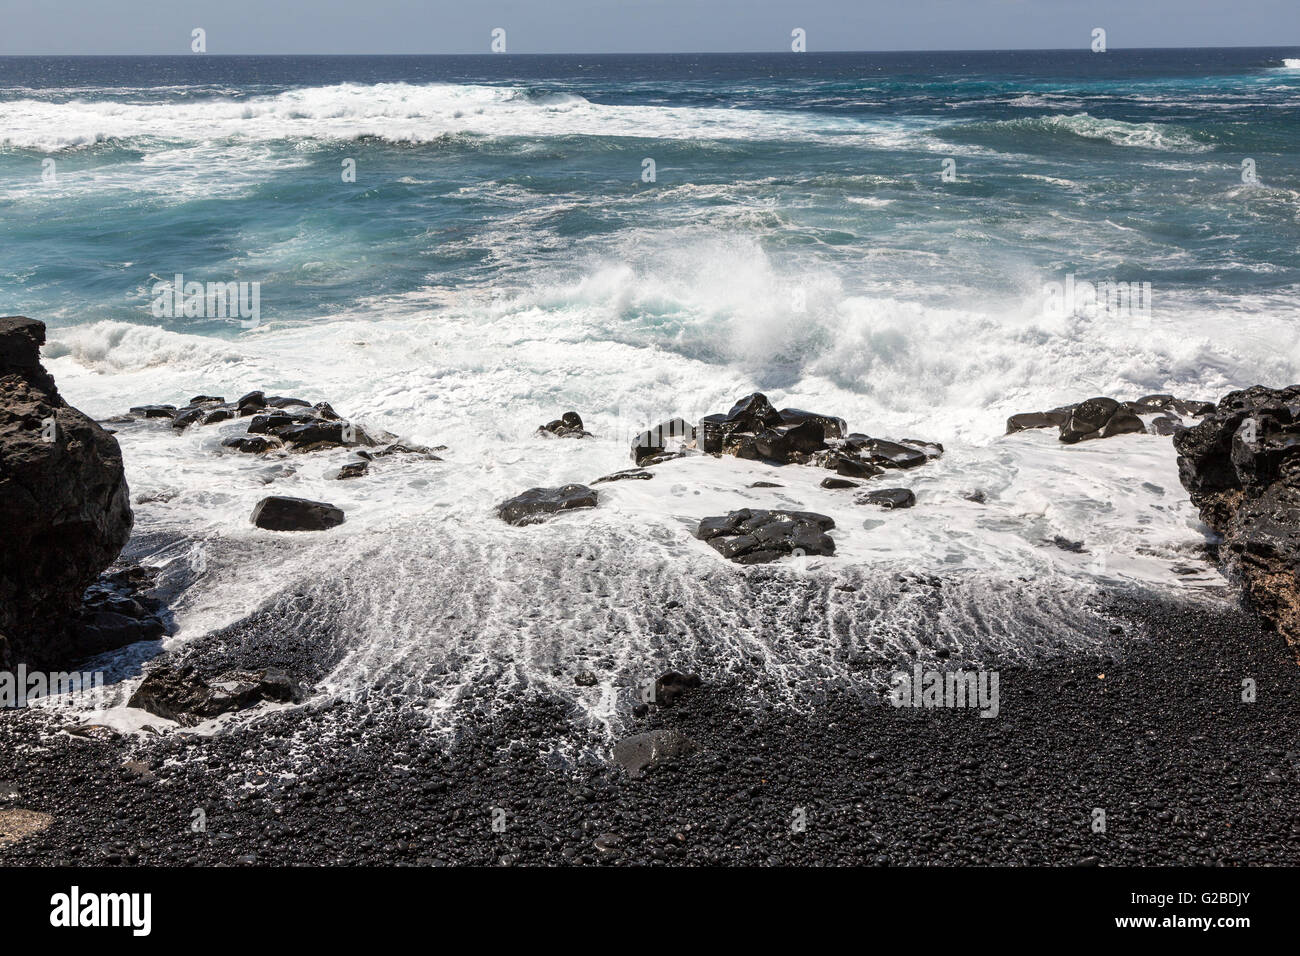 Waves breaking on black volcanic rock on beach, Playa Janubio, Lanzarote, Canary Islands, Spain Stock Photo